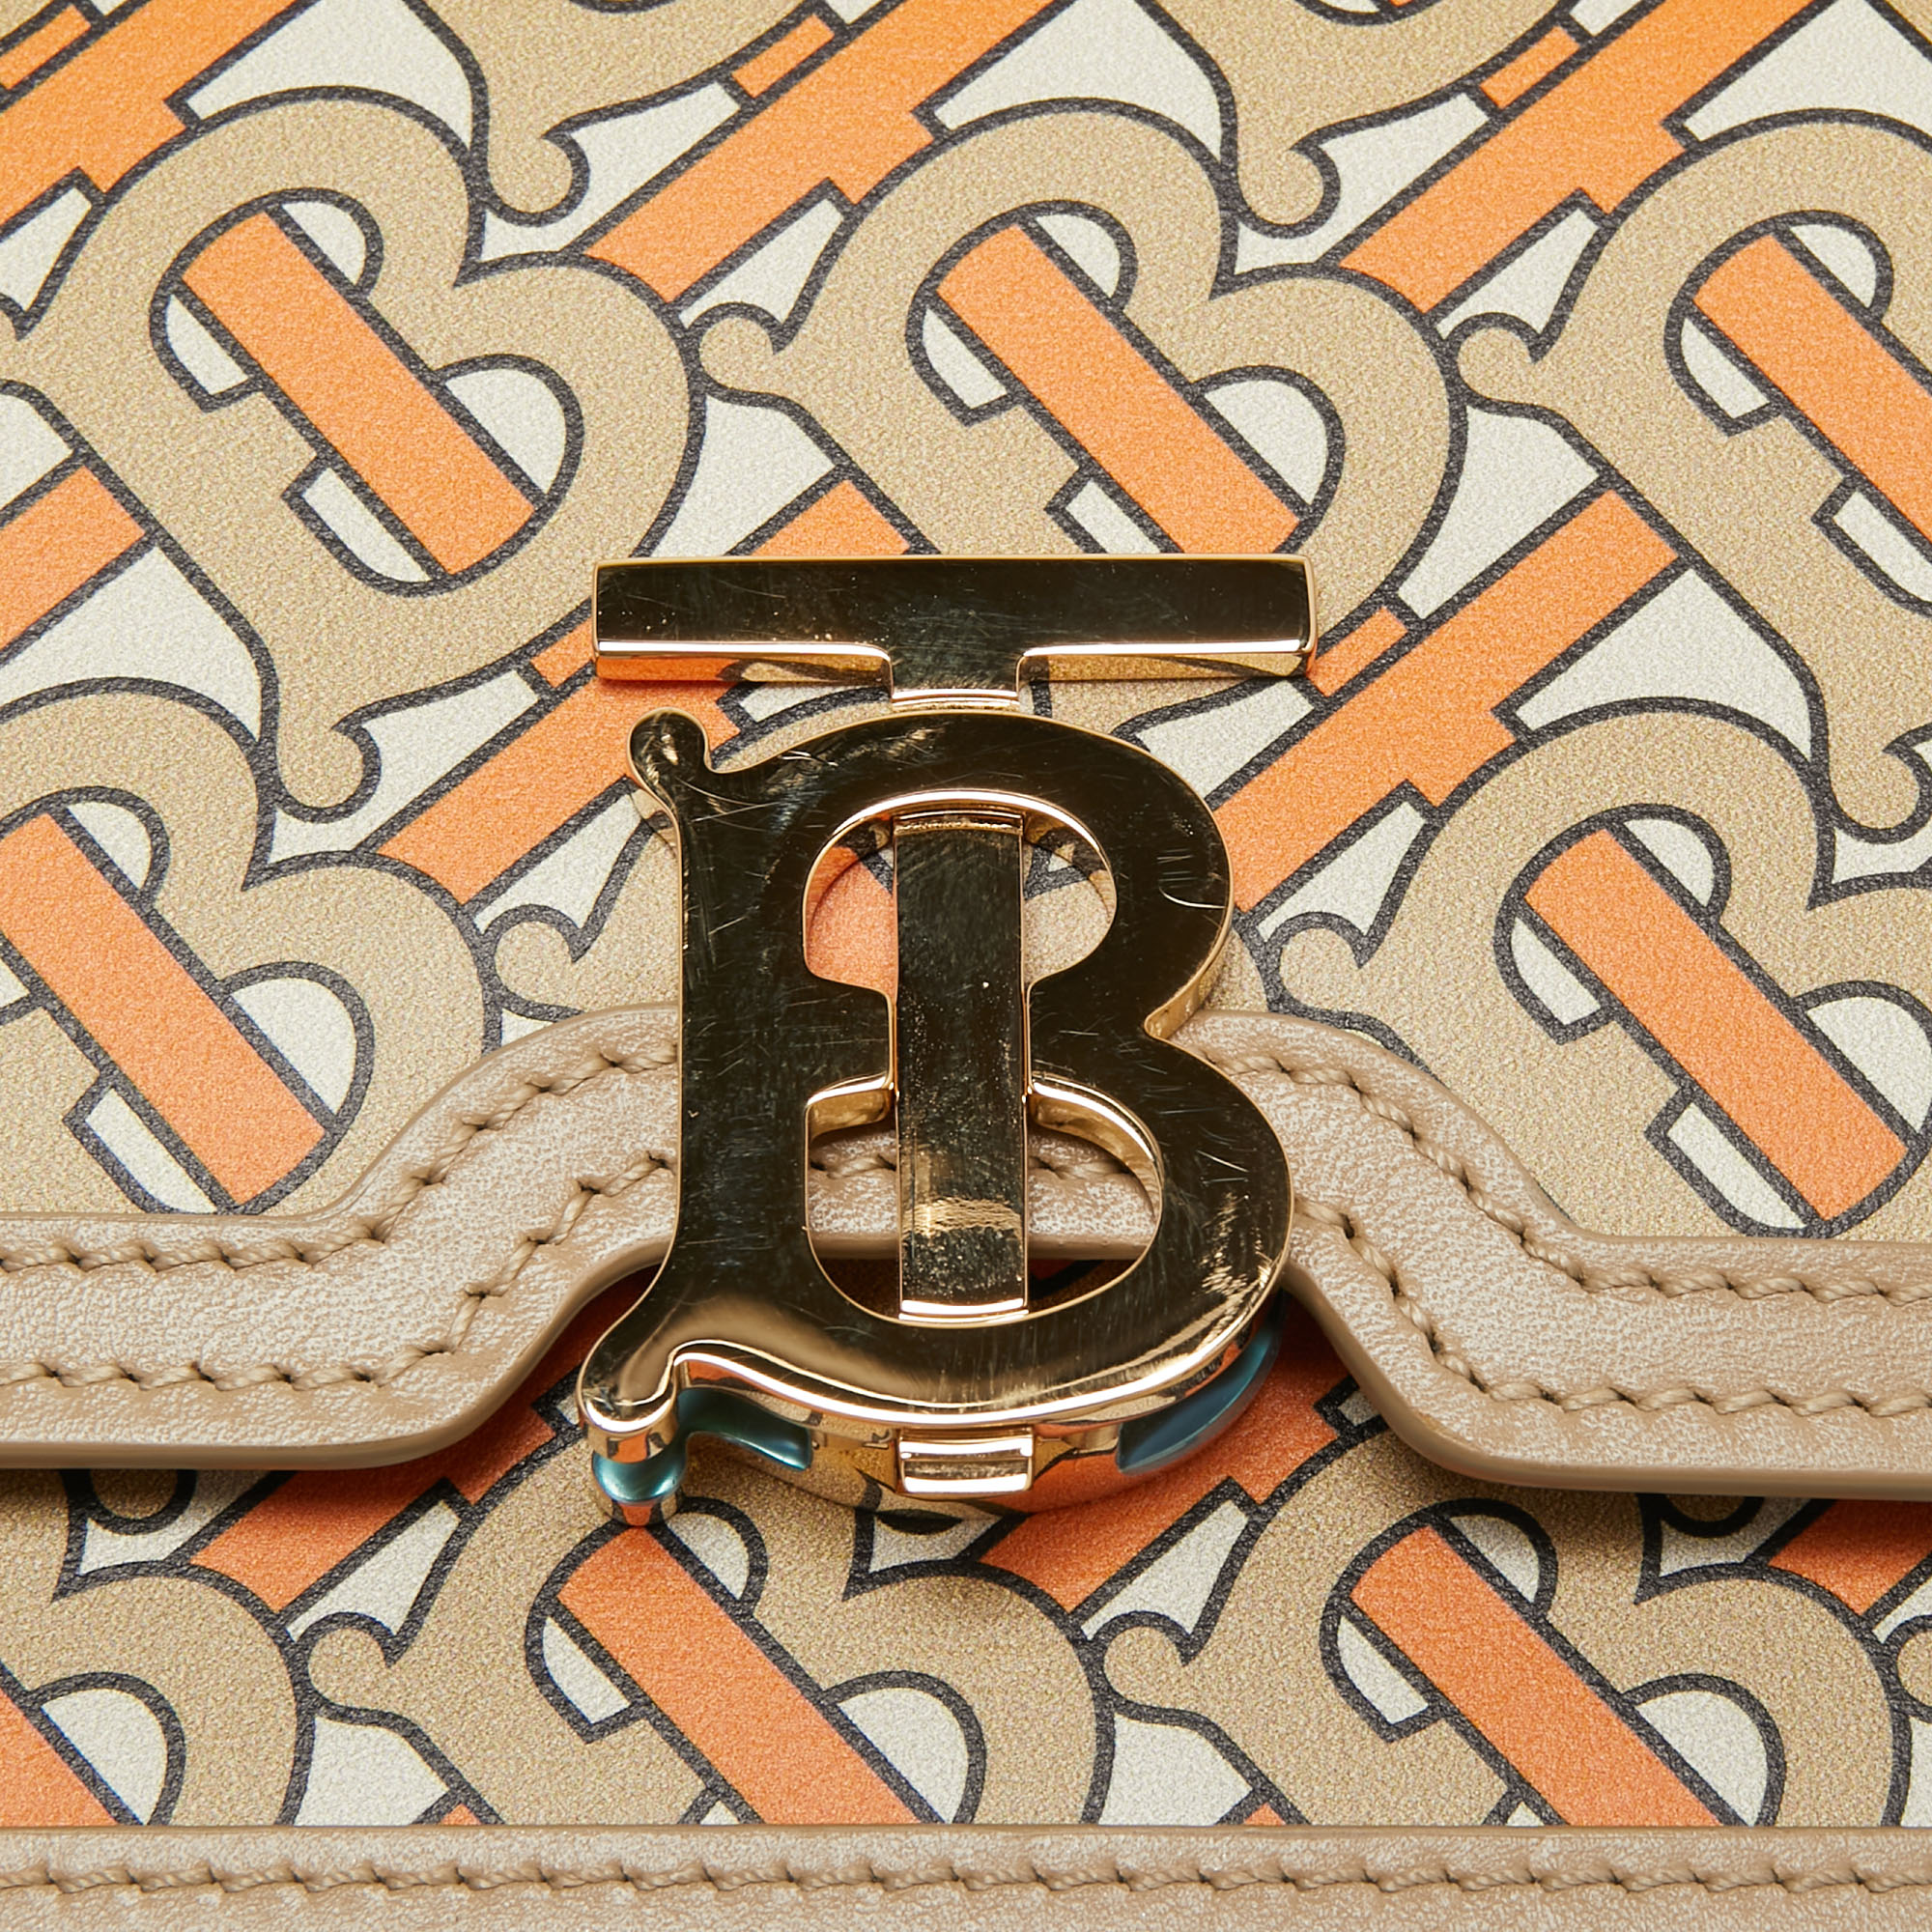 Burberry Beige Leather TB Monogram Medium Shoulder Bag